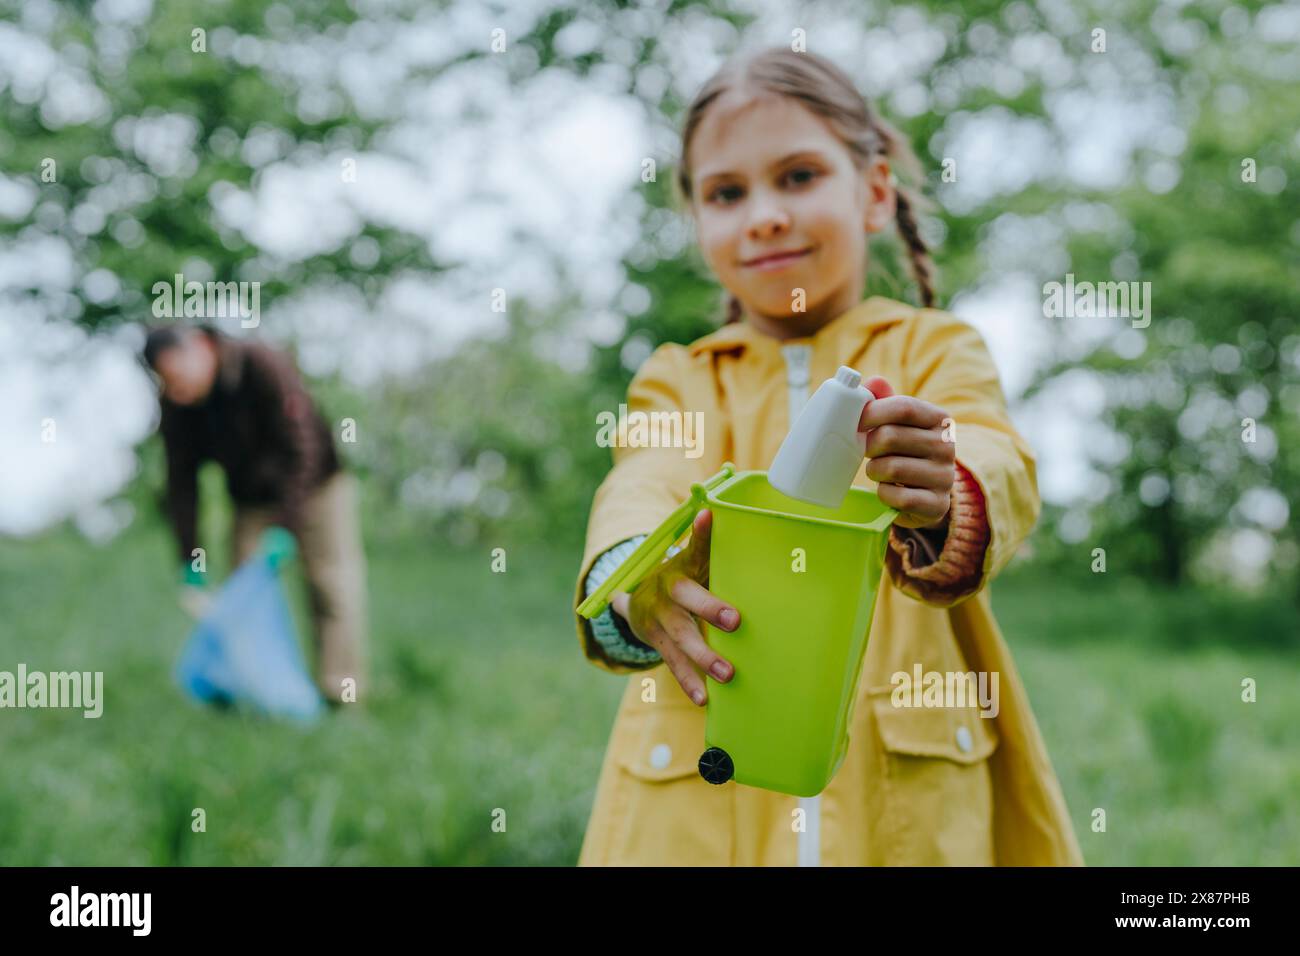 Smiling girl putting toy plastic bottle in garbage bin Stock Photo